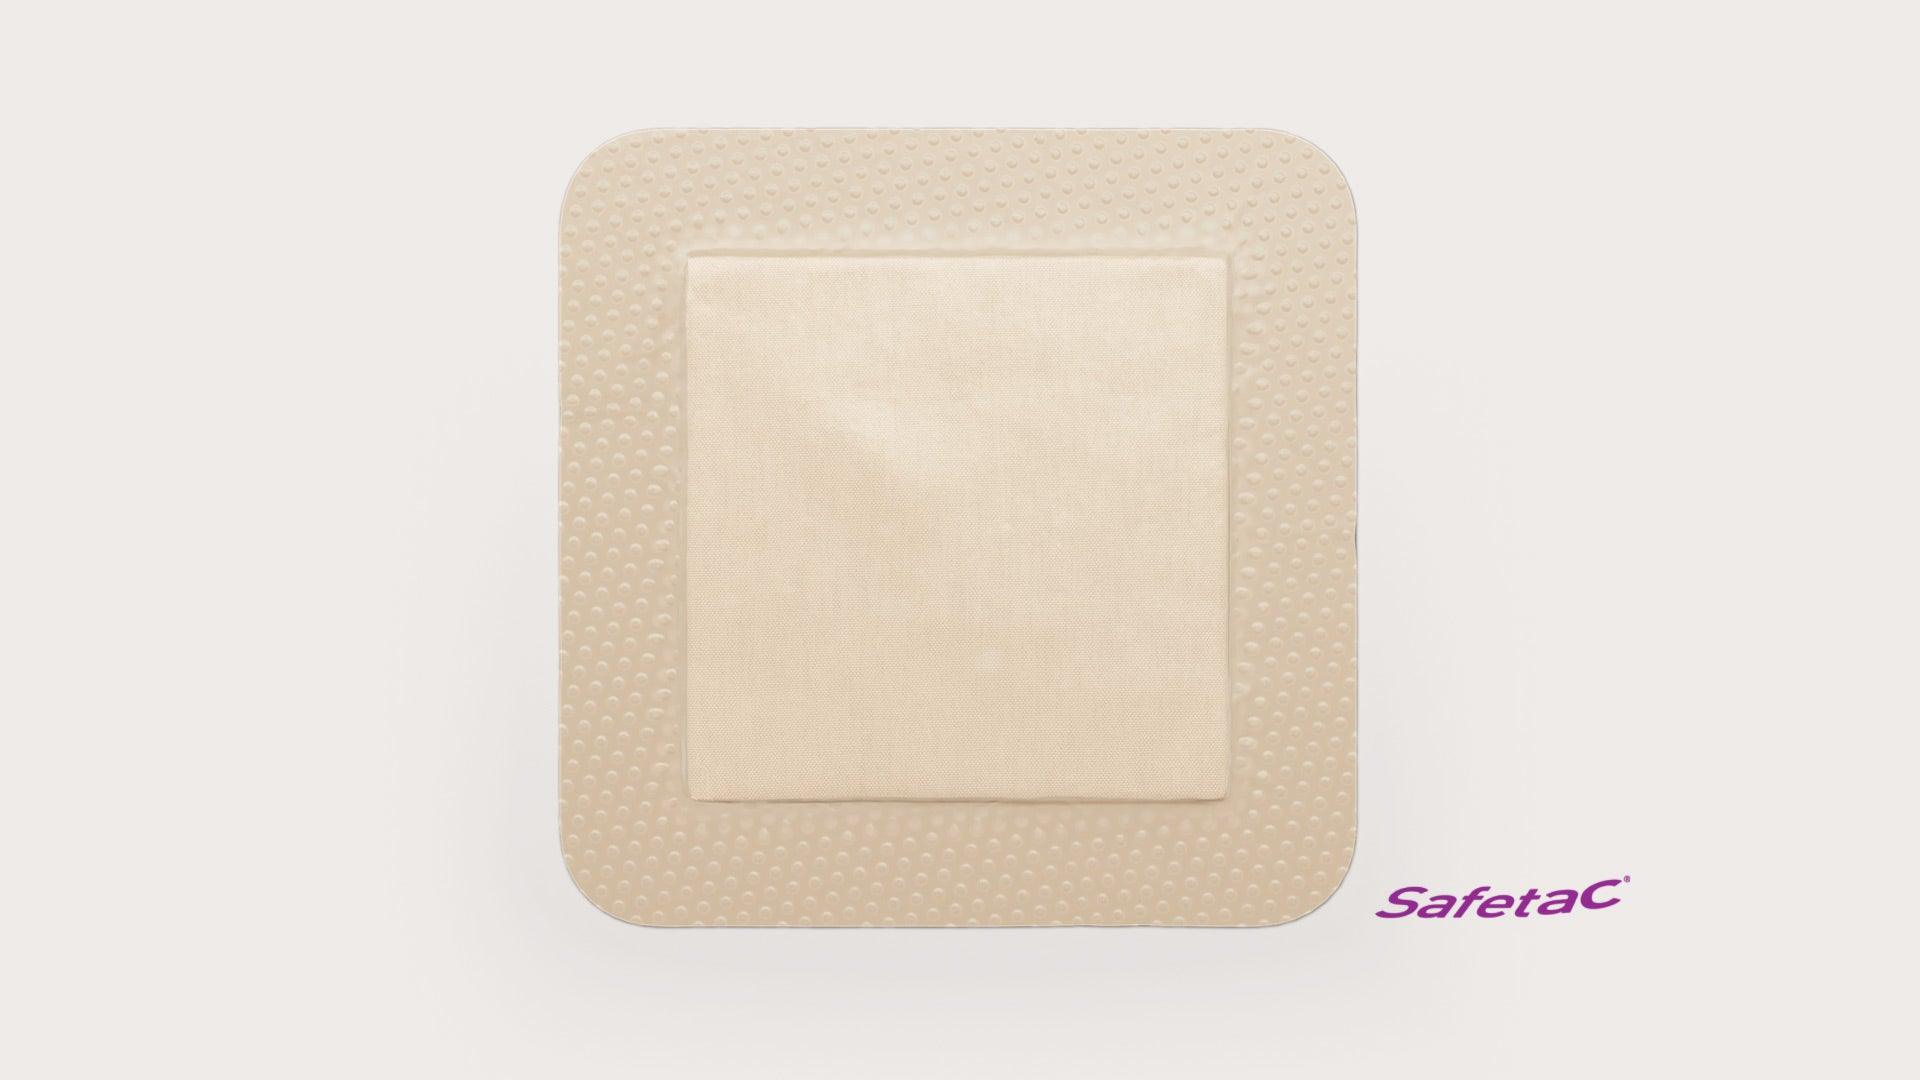 Mepilex Border Lite Self-Adherent Soft Silicone Foam Dressing by Molnlycke